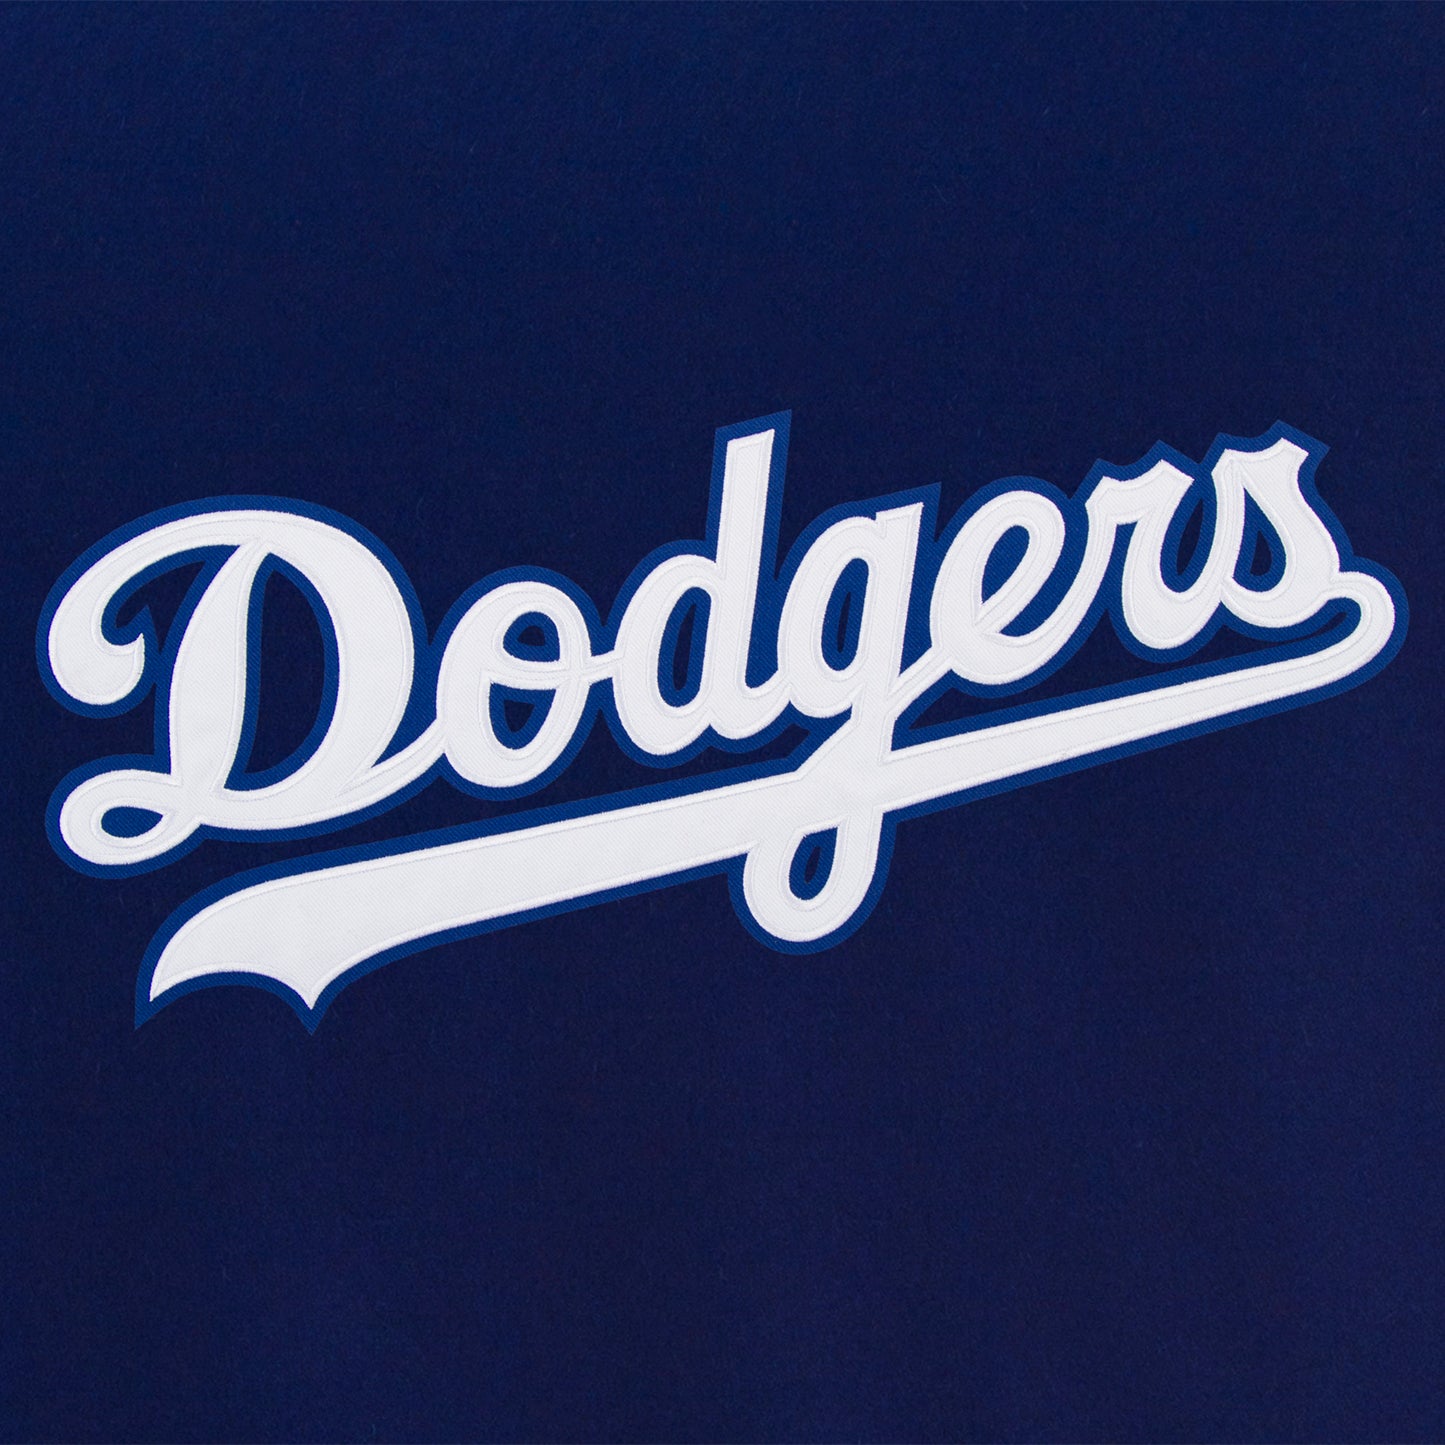 MLB Jacket Los Angeles Dodgers REVERSIBLE